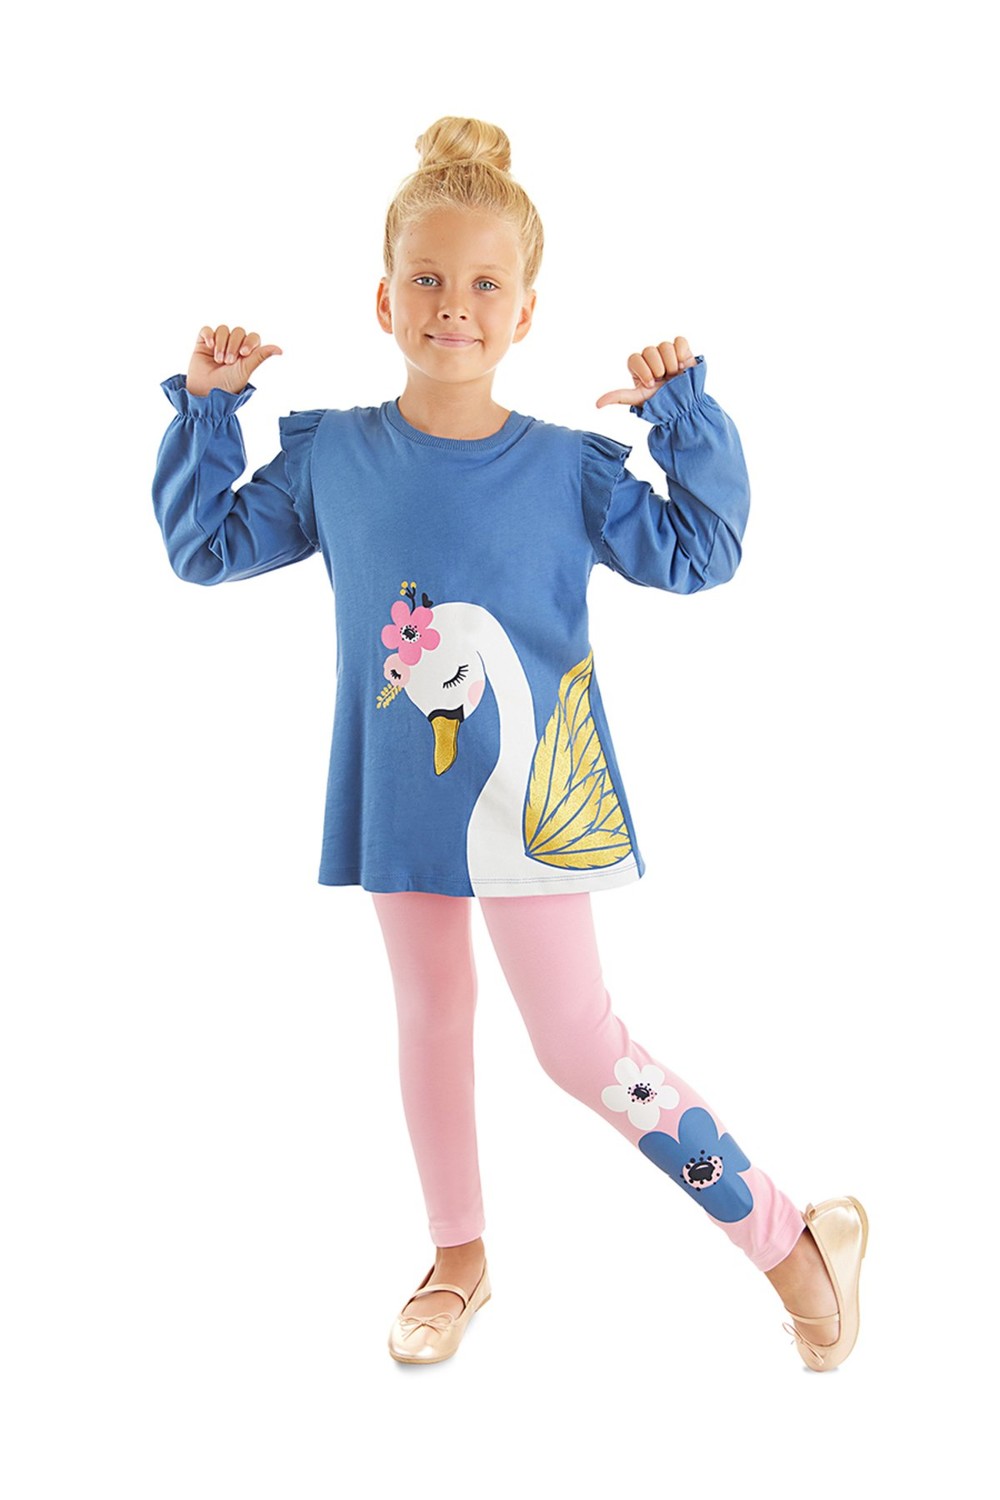 Denokids Swan Girl's Navy Blue T-shirt Pink Tights Set